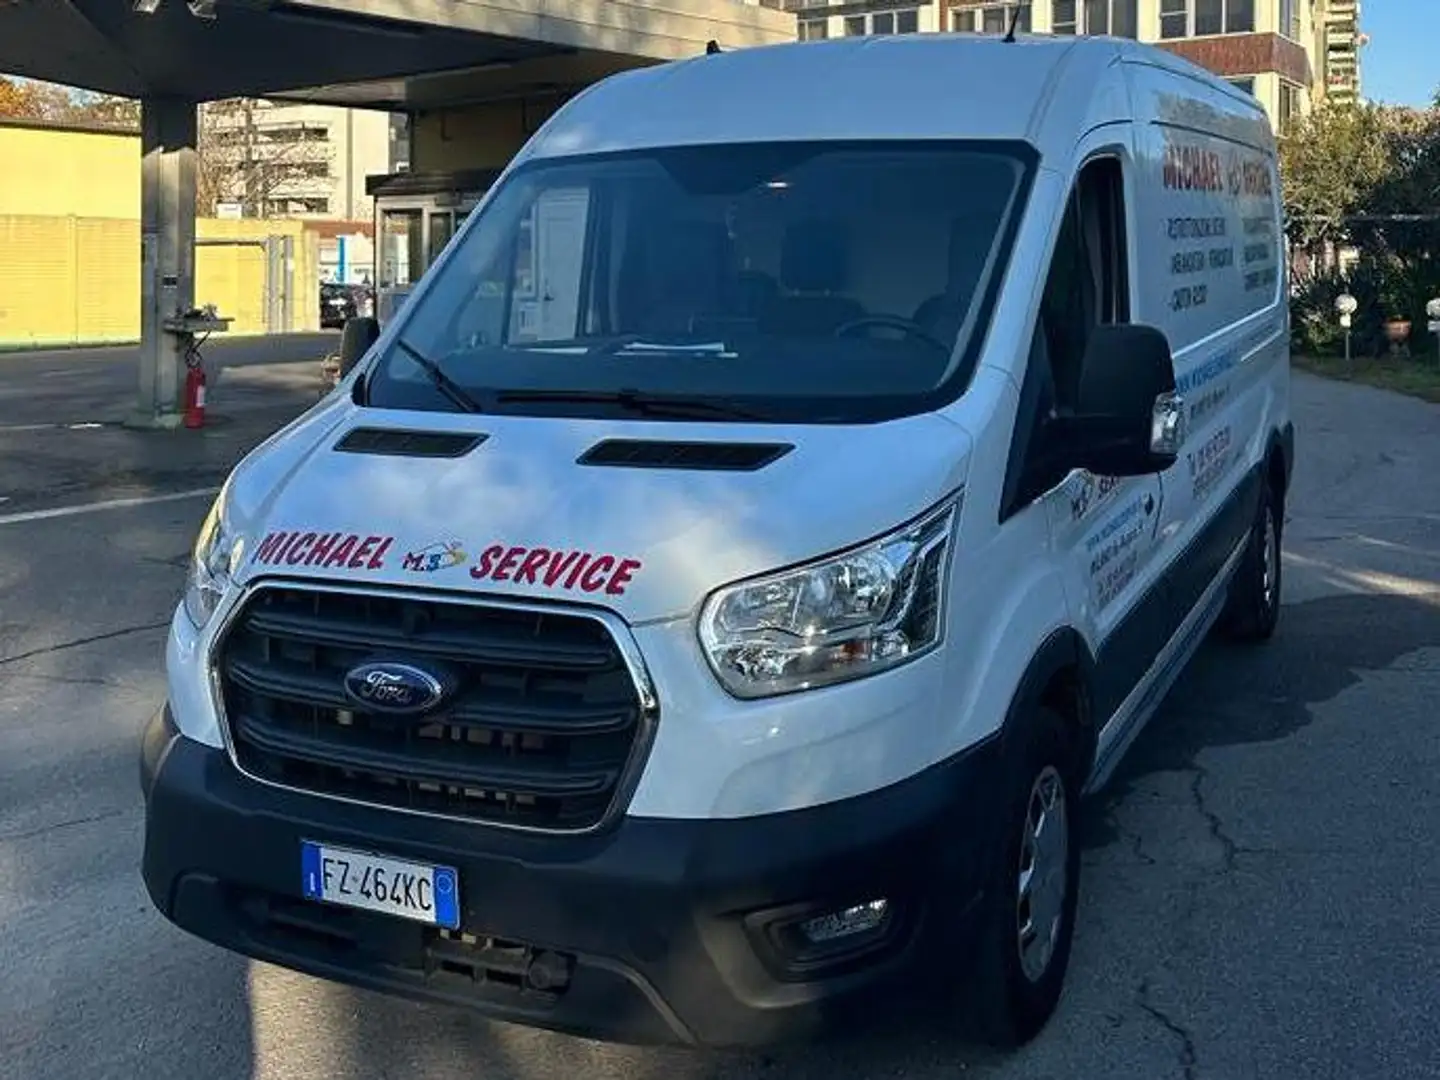 usato Ford Transit Furgoni/Van a milano per € 26.000,-